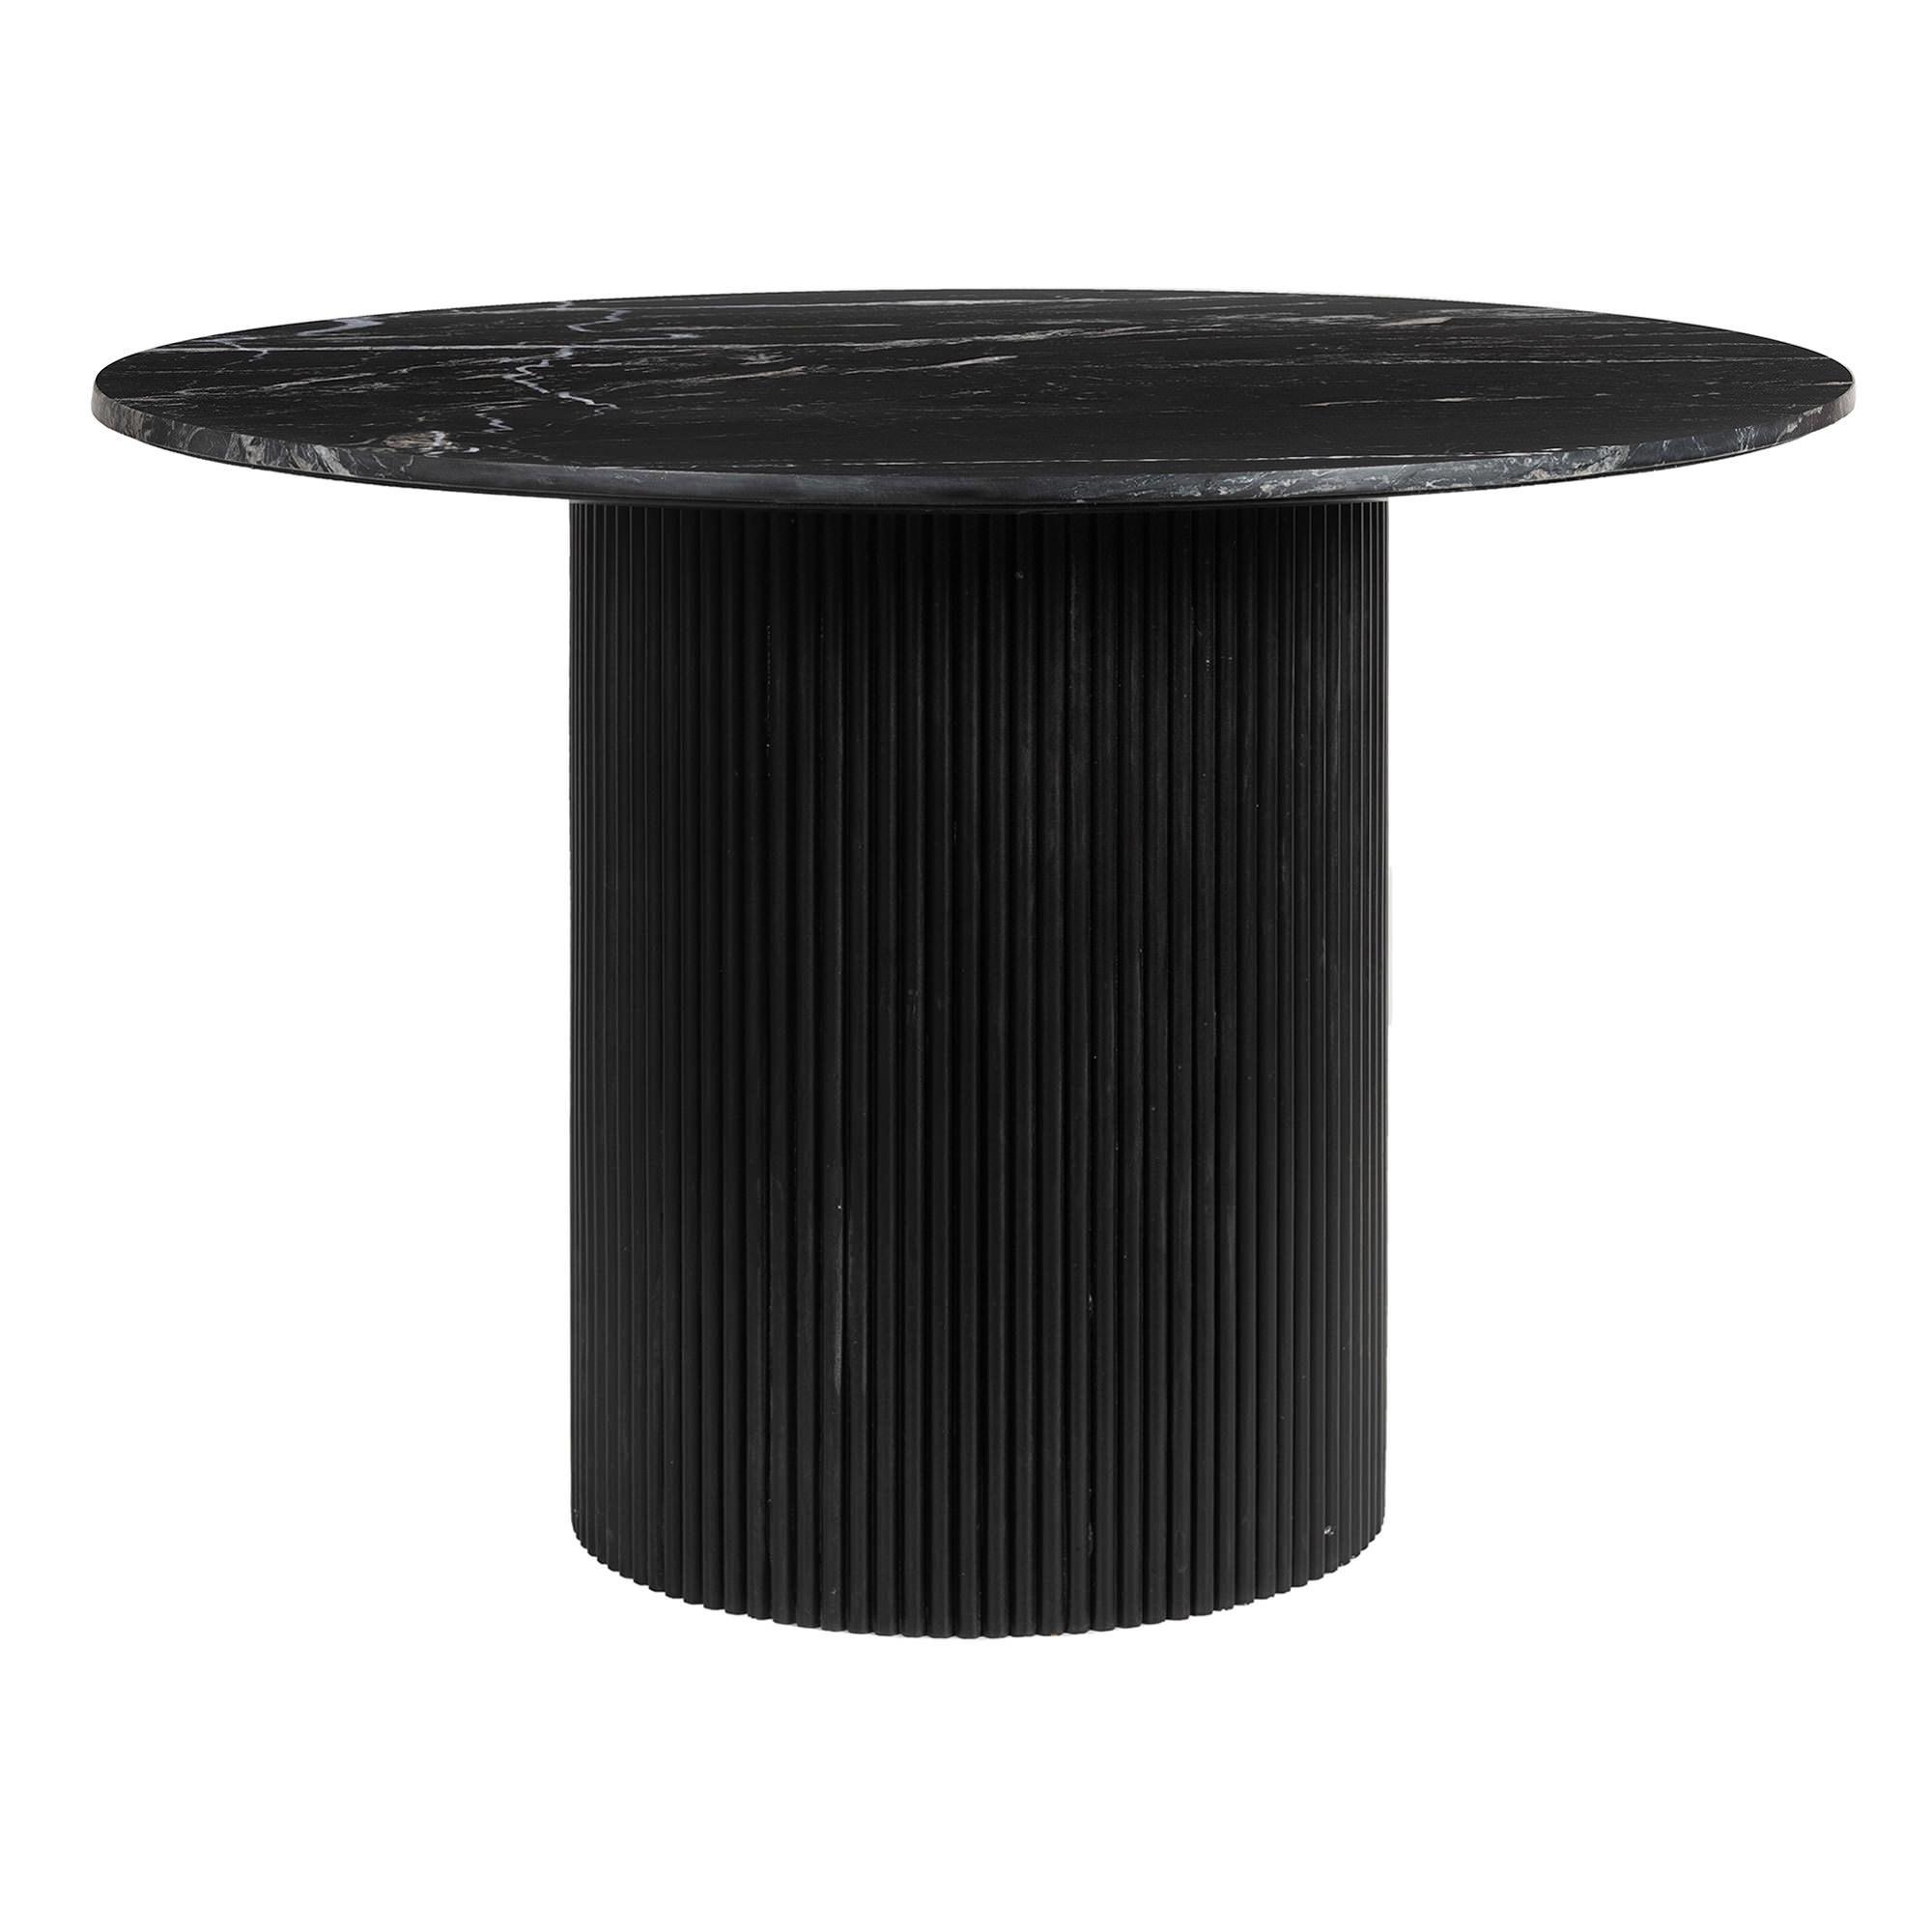 Paloma Marble & Timber Round Dining Table, 120cm, Black / Black